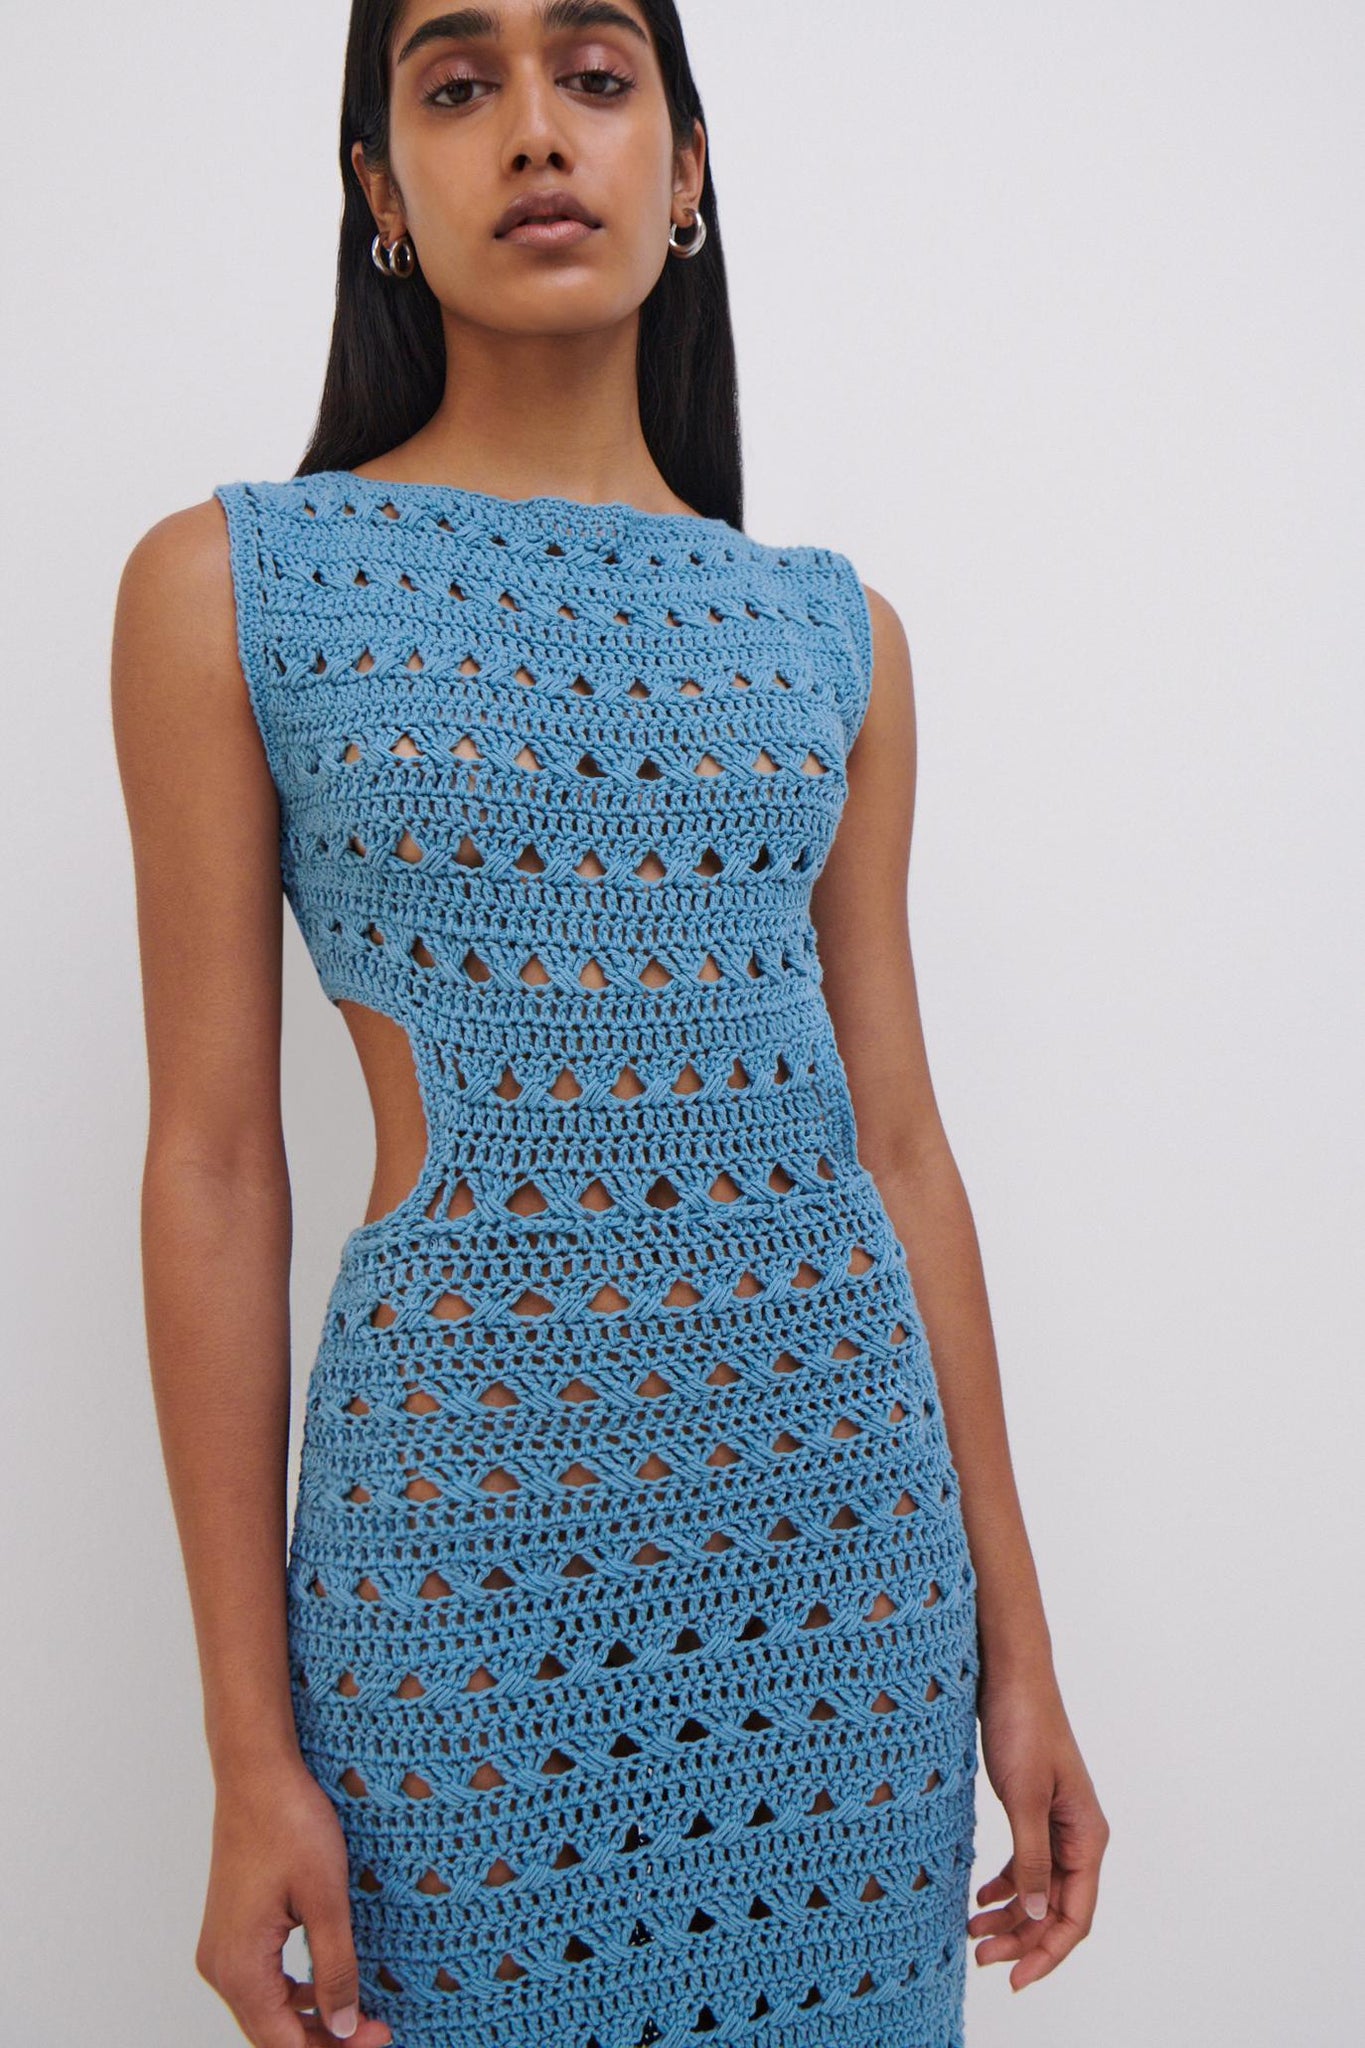 JS x Elexiay Crochet Dress - SIMKHAI 